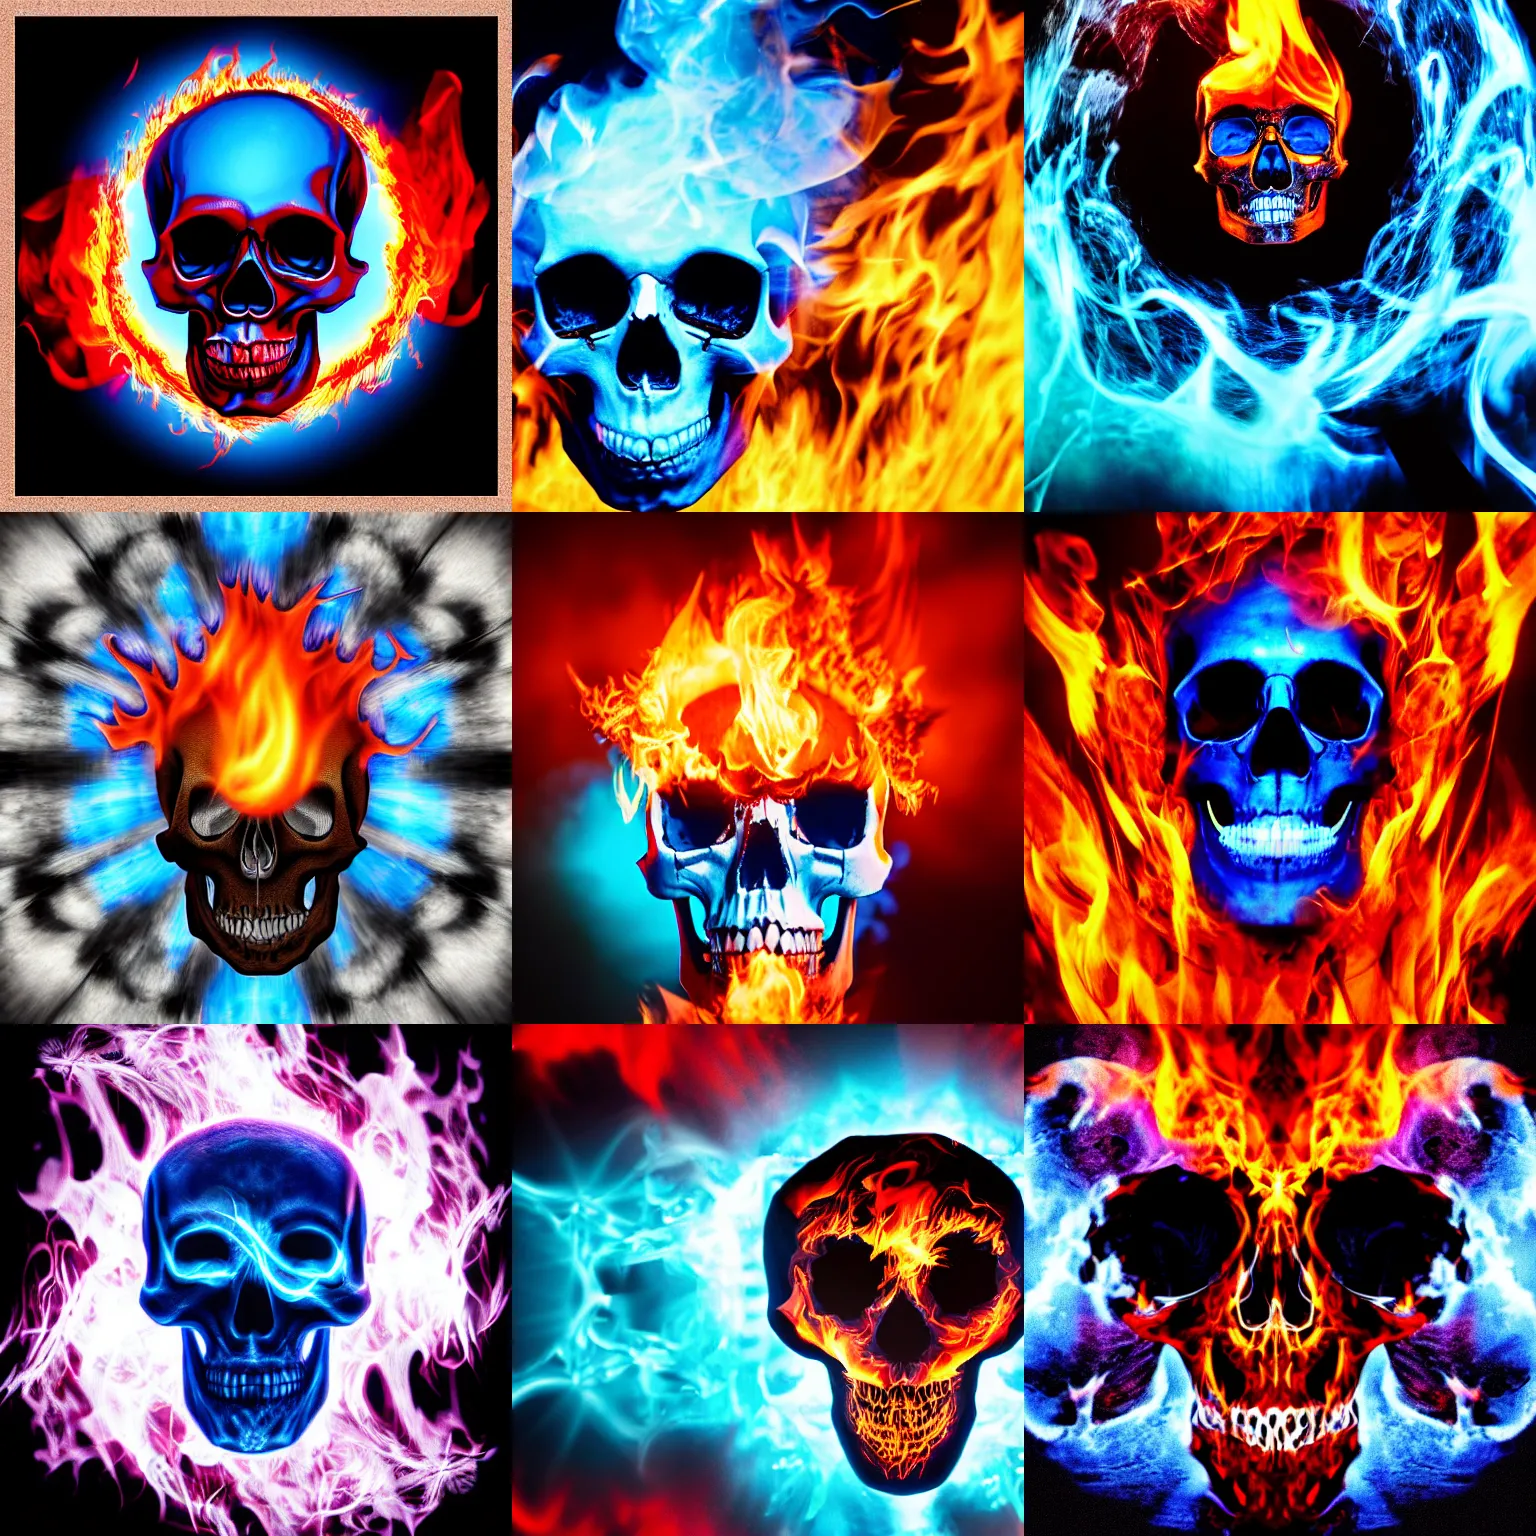 Prompt: skull, flaming left eye, blue flames, photography, black background